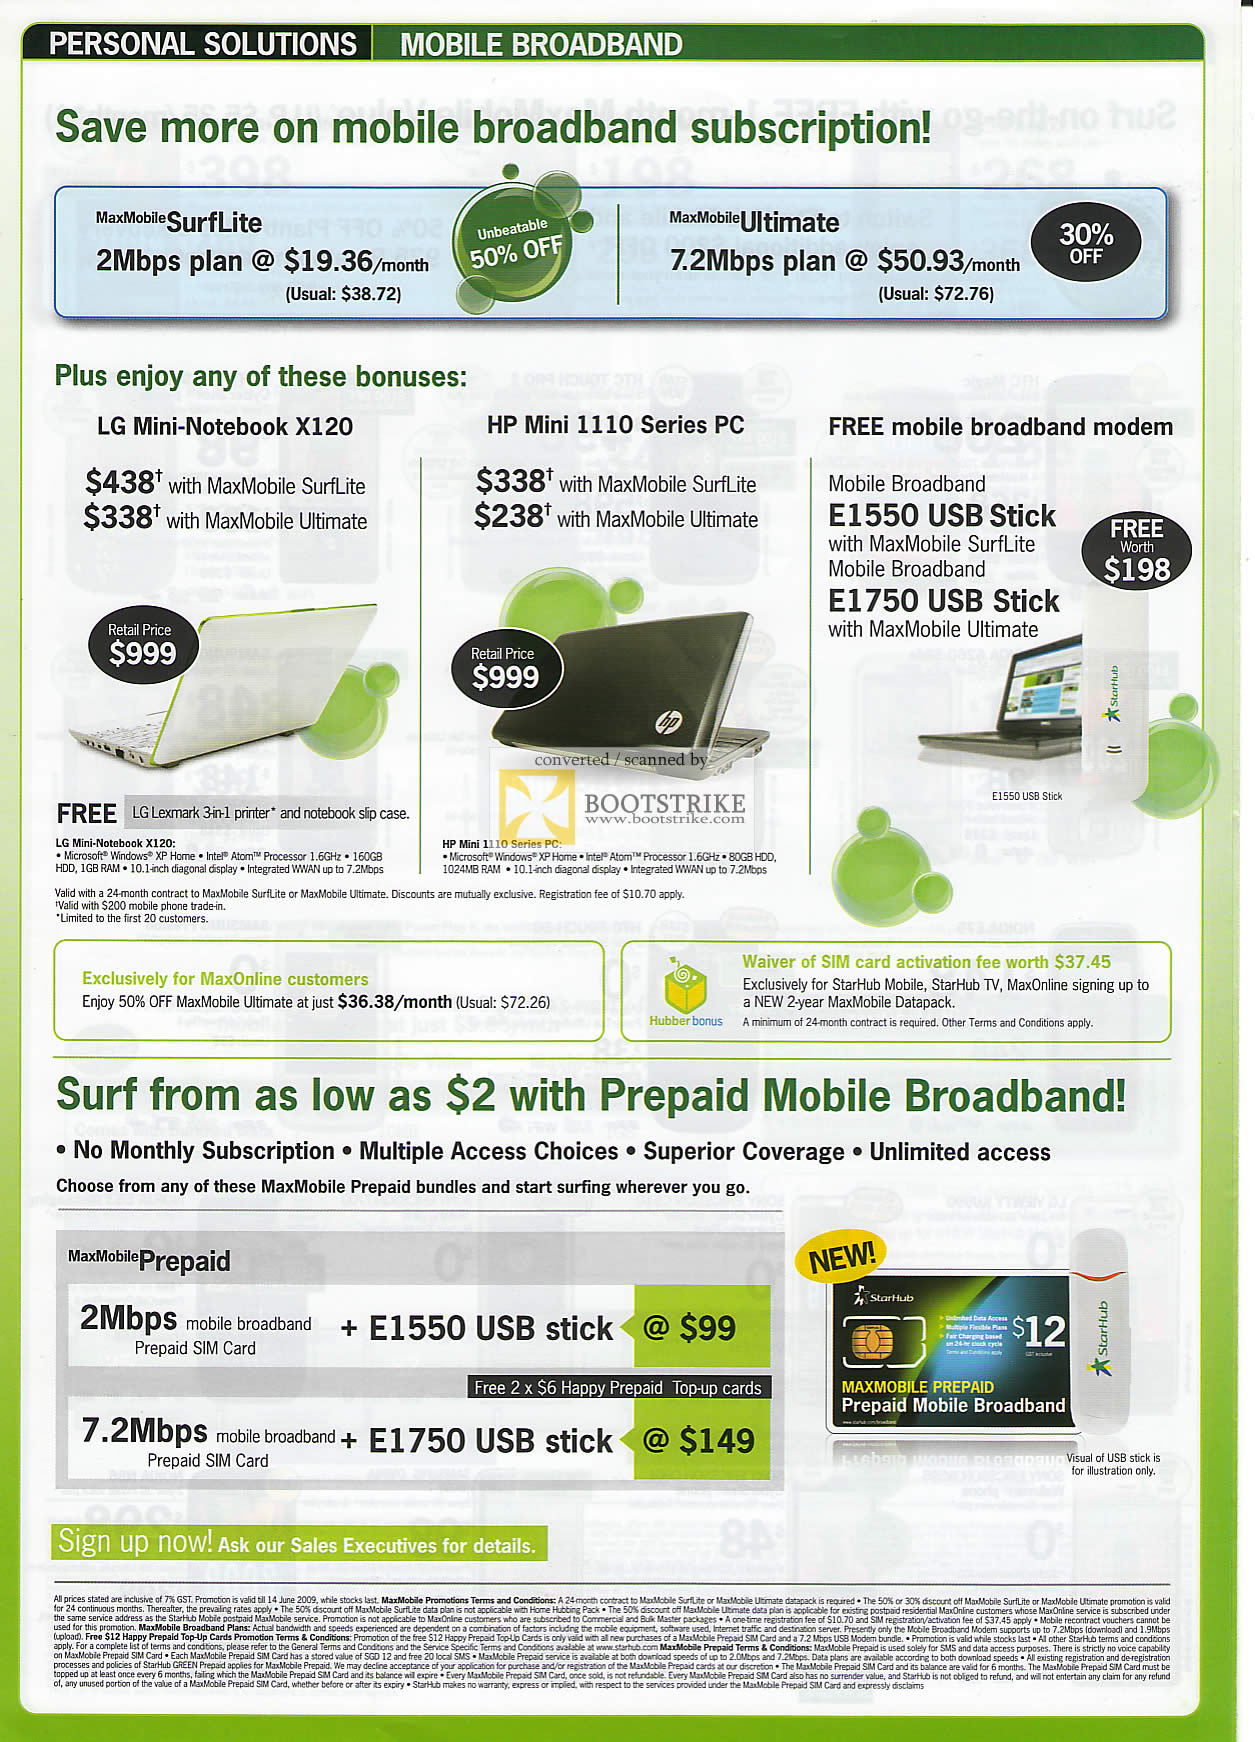 PC Show 2009 price list image brochure of Starhub Mobile Broadband LG X120 HP Mini 1110